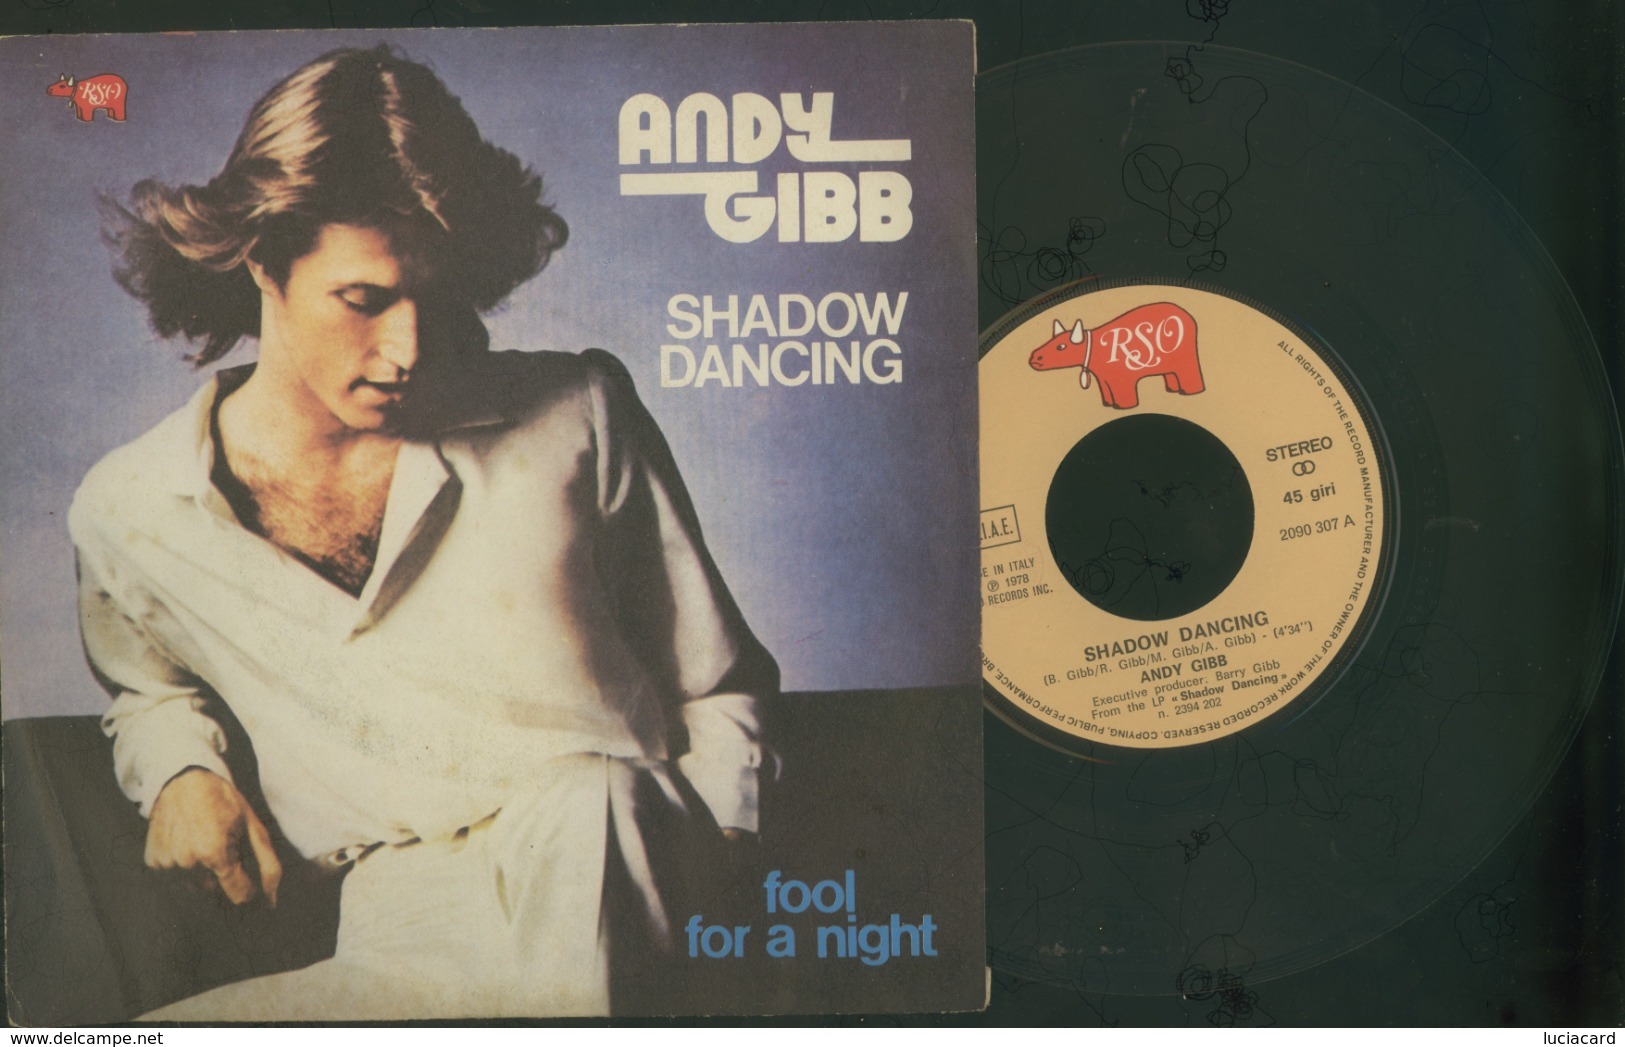 ANDY GIBB -SHADOW DANCING -FOOL FOR A NIGHT -DISCO VINILE 45 GIRI - Disco, Pop